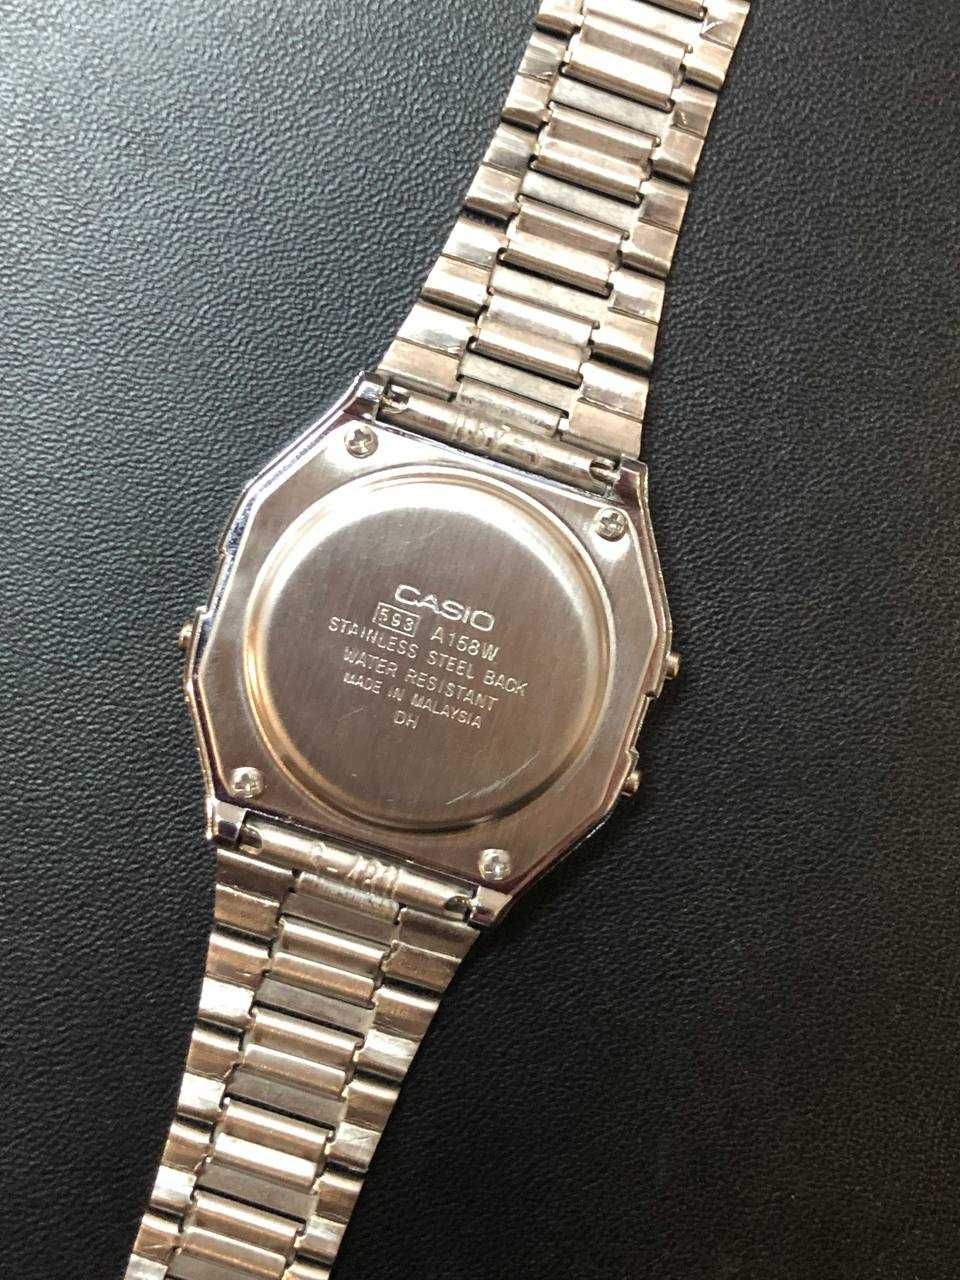 CAS1O Vintage Годинник A158 / Ретро касио /Часы касіо /F91W A159W 158W